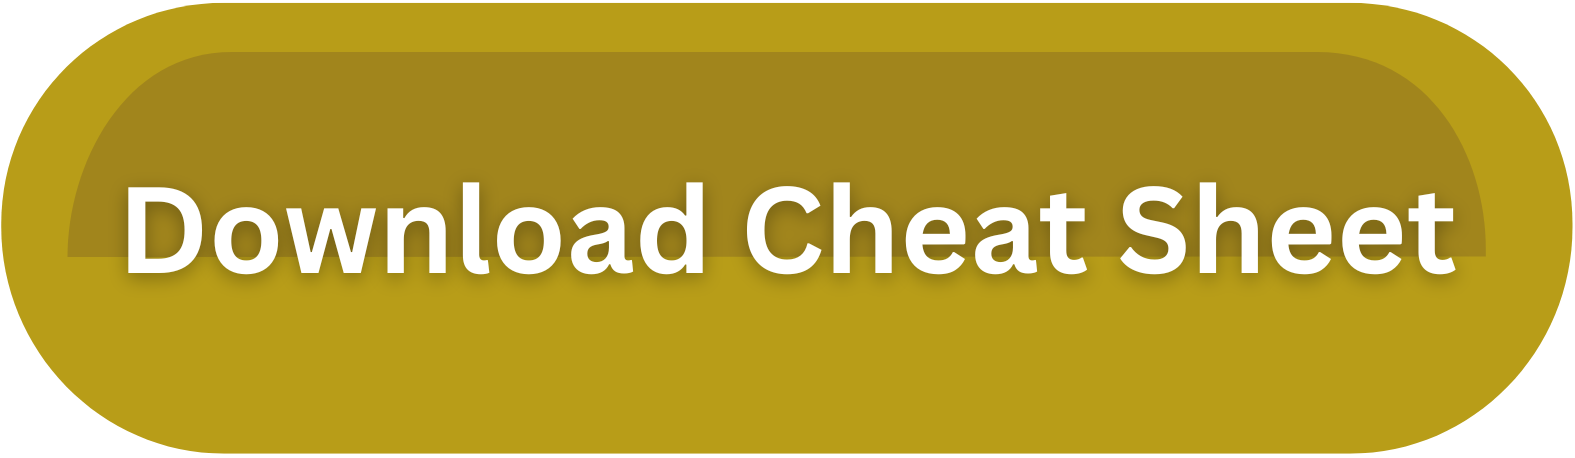 Download cheat sheet